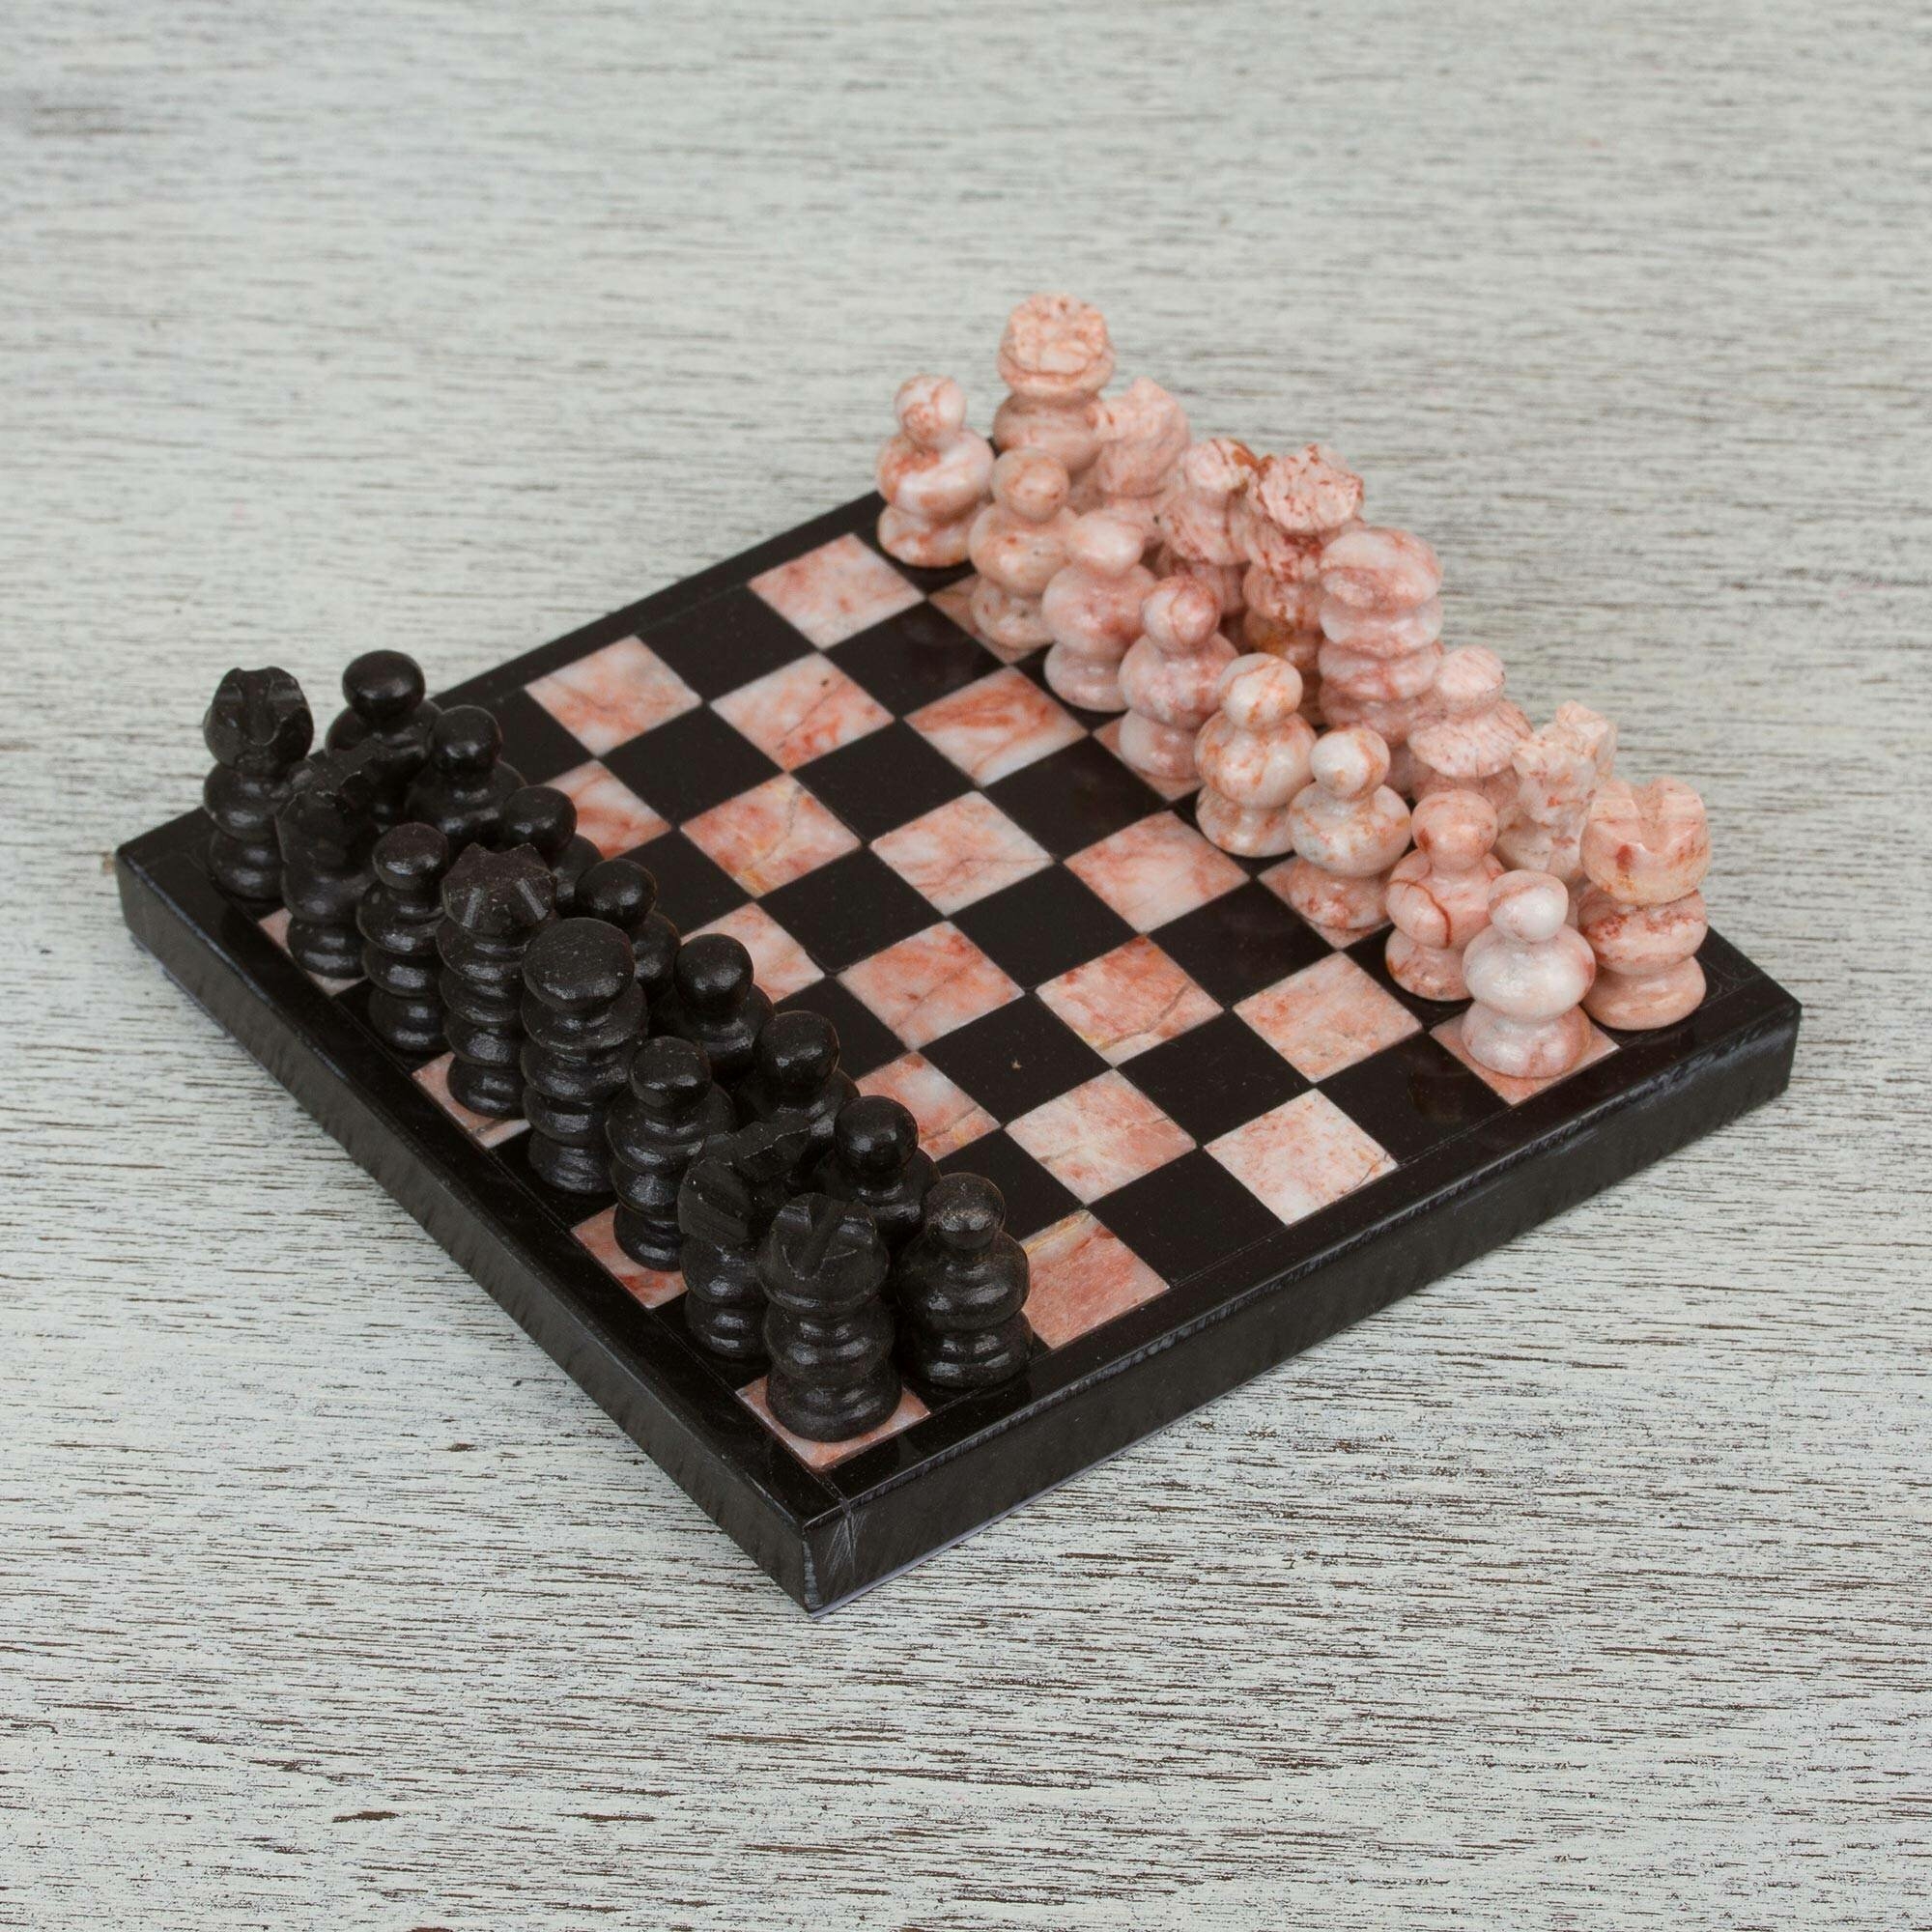 Handmade Tia Black Chess Board Game - Image 0